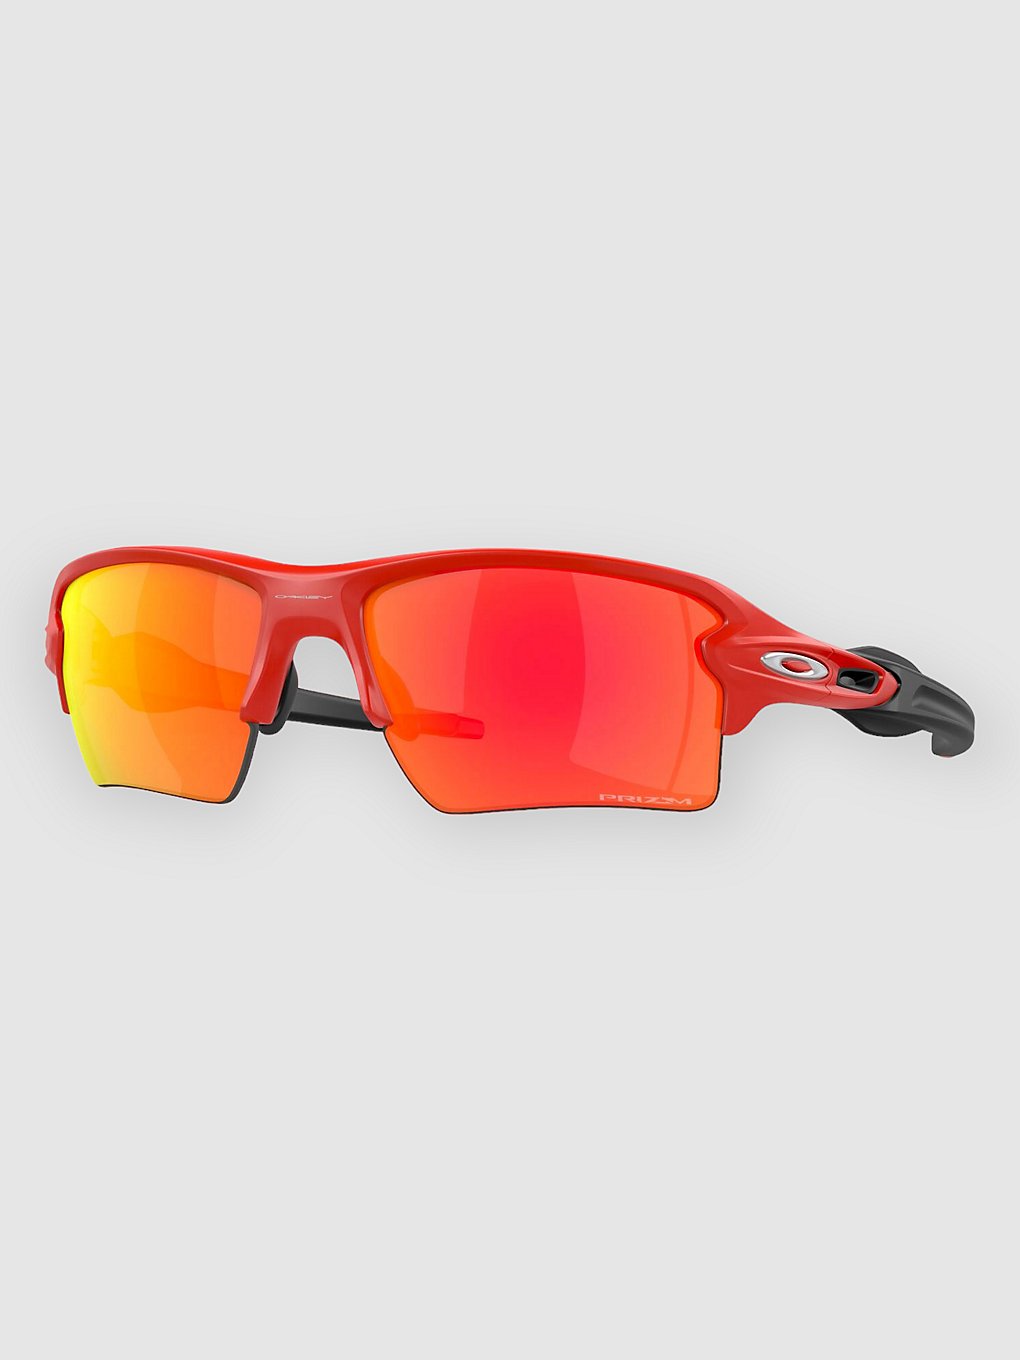 Oakley Flak 2.0 Xl Matte Redline Sunglasses prizm ruby